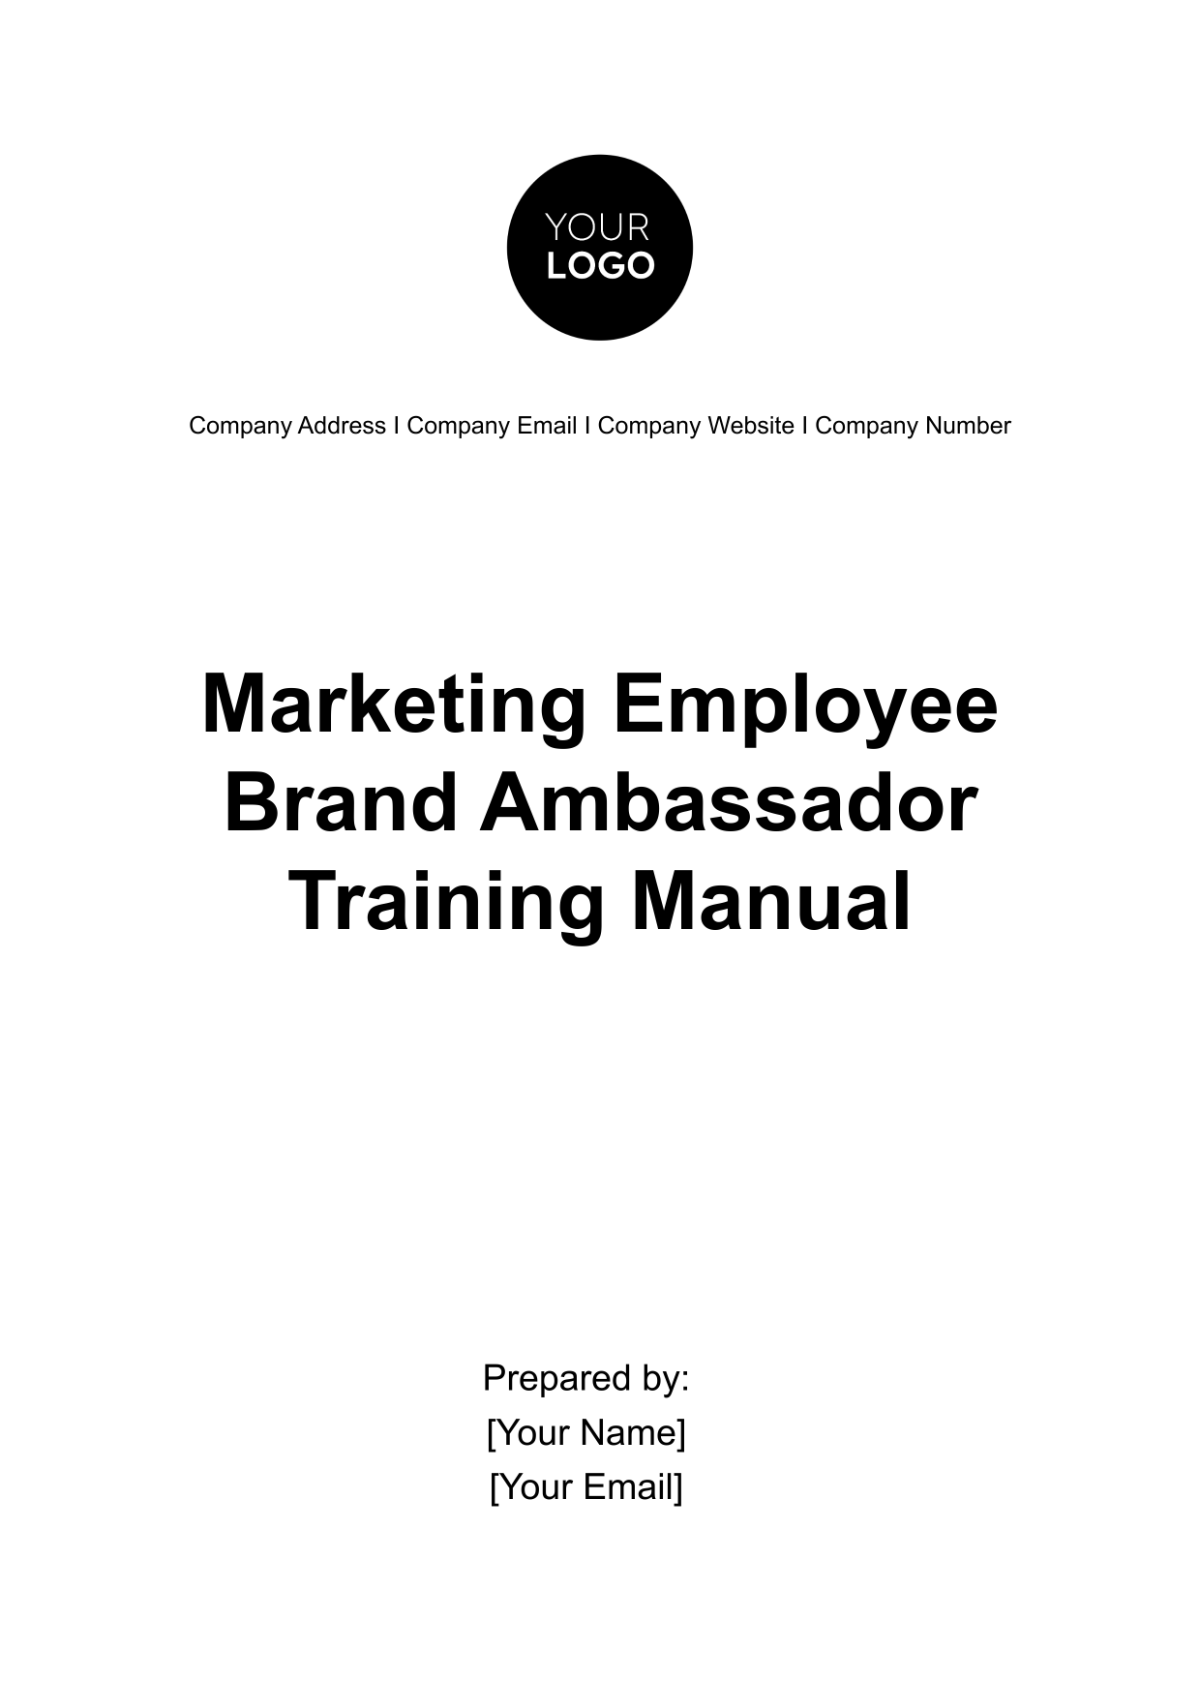 Marketing Employee Brand Ambassador Training Manual Template